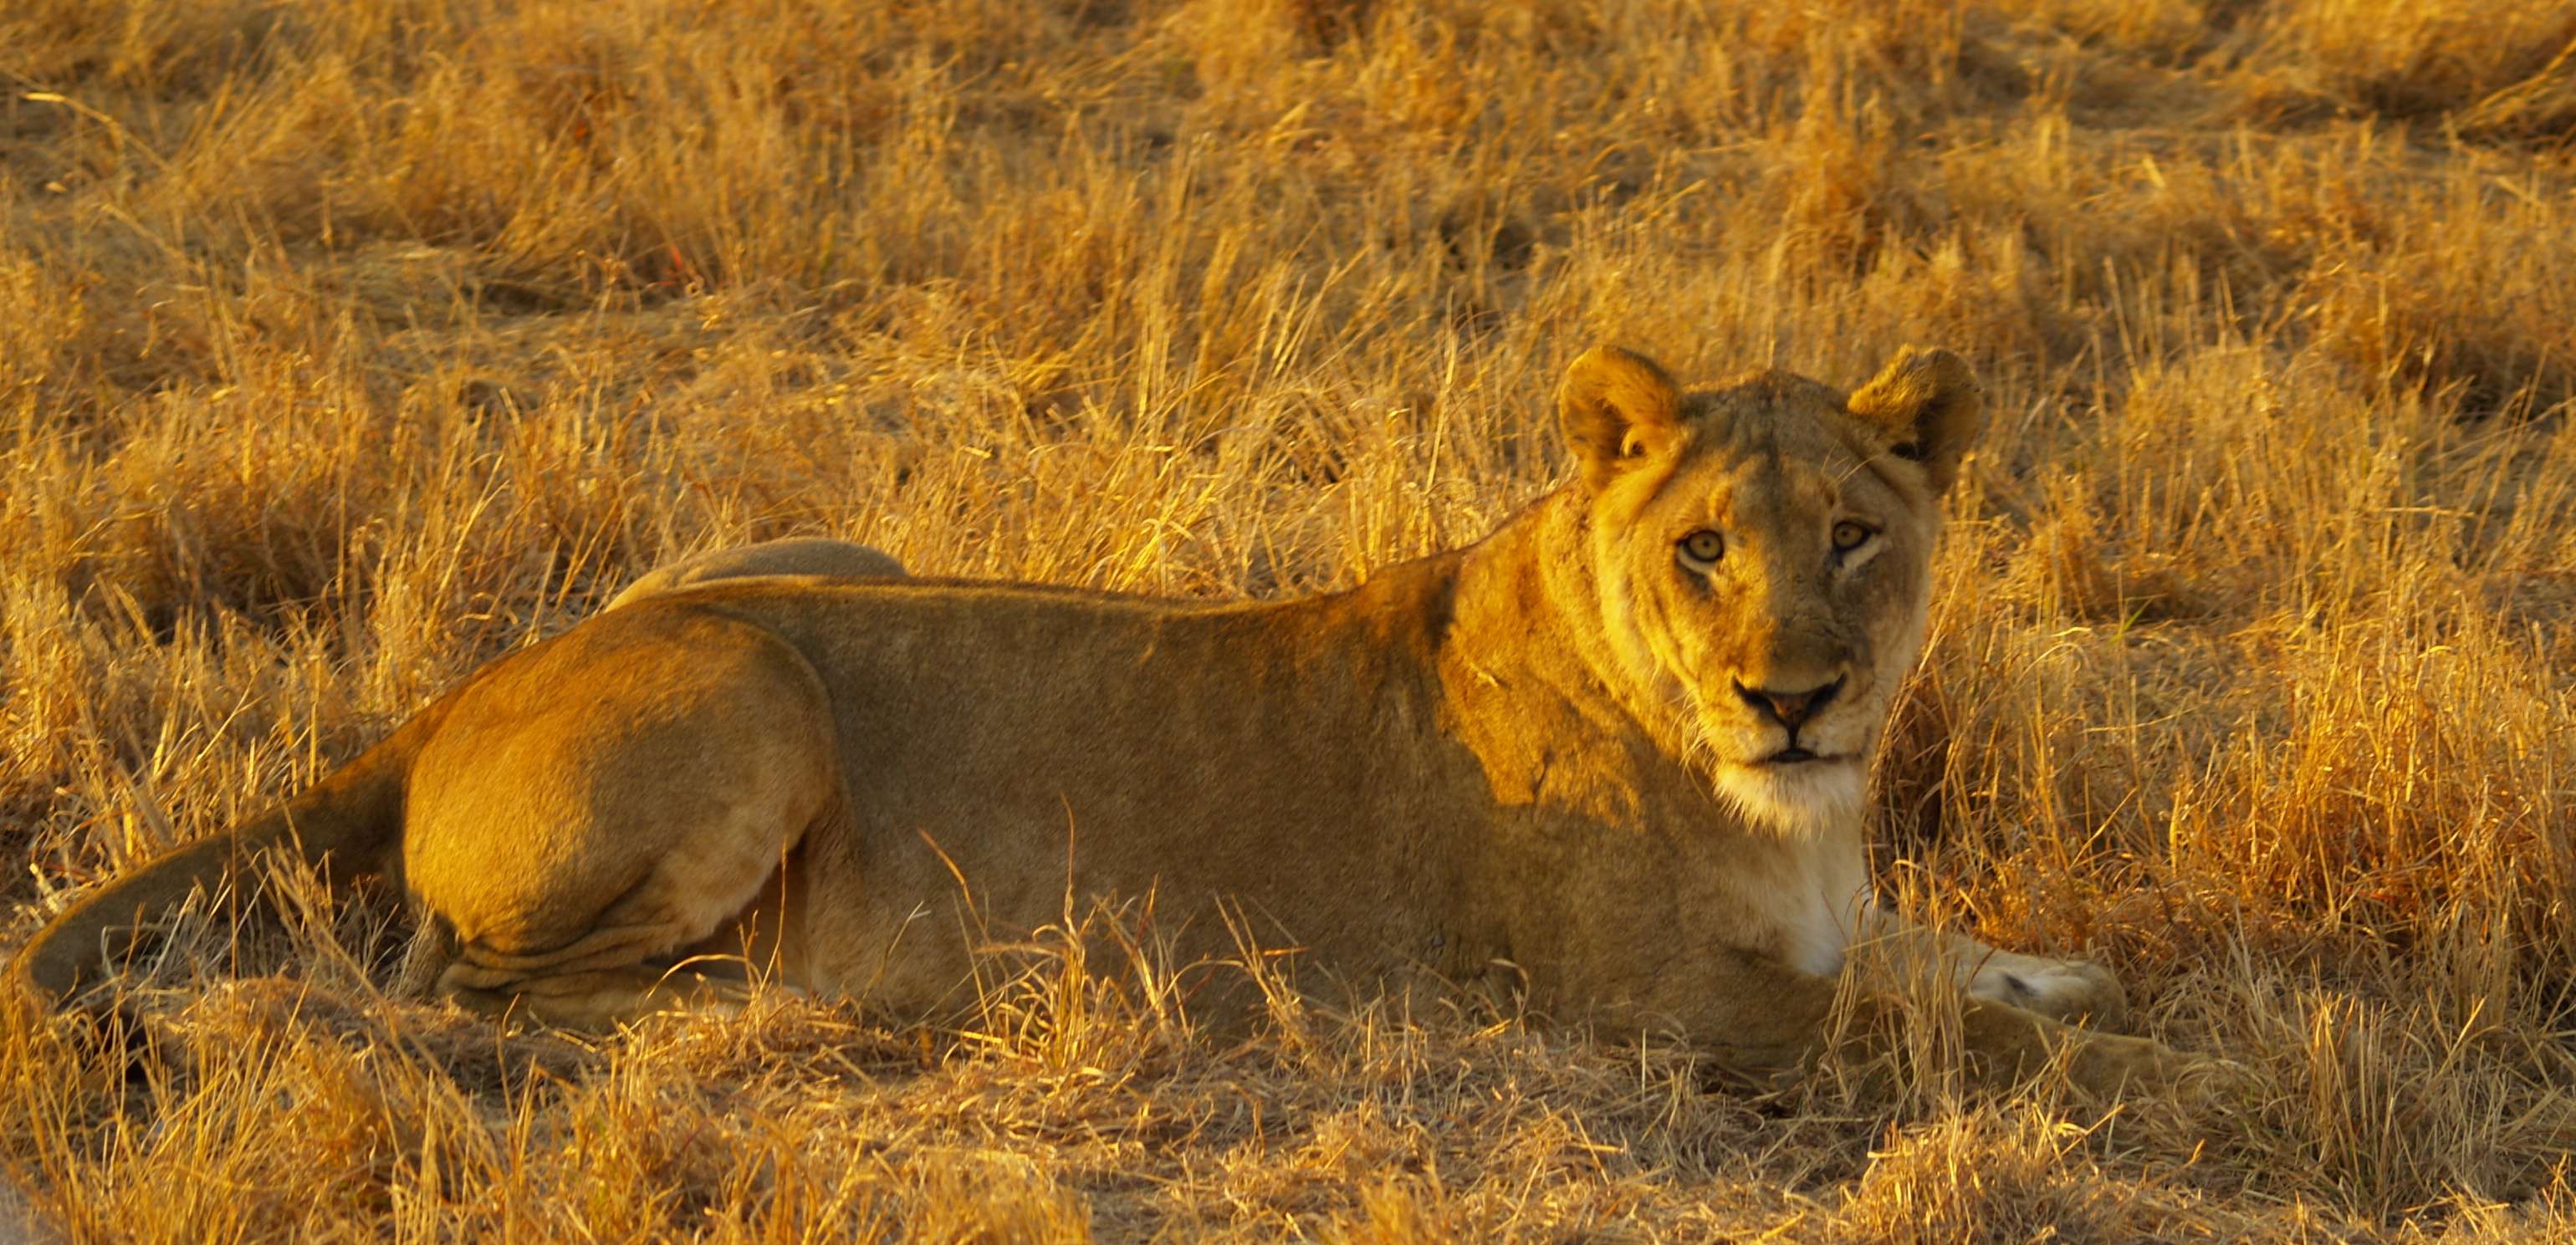 18 días en Sudáfrica - Blogs of South Africa - Safari en el Kruger (15)